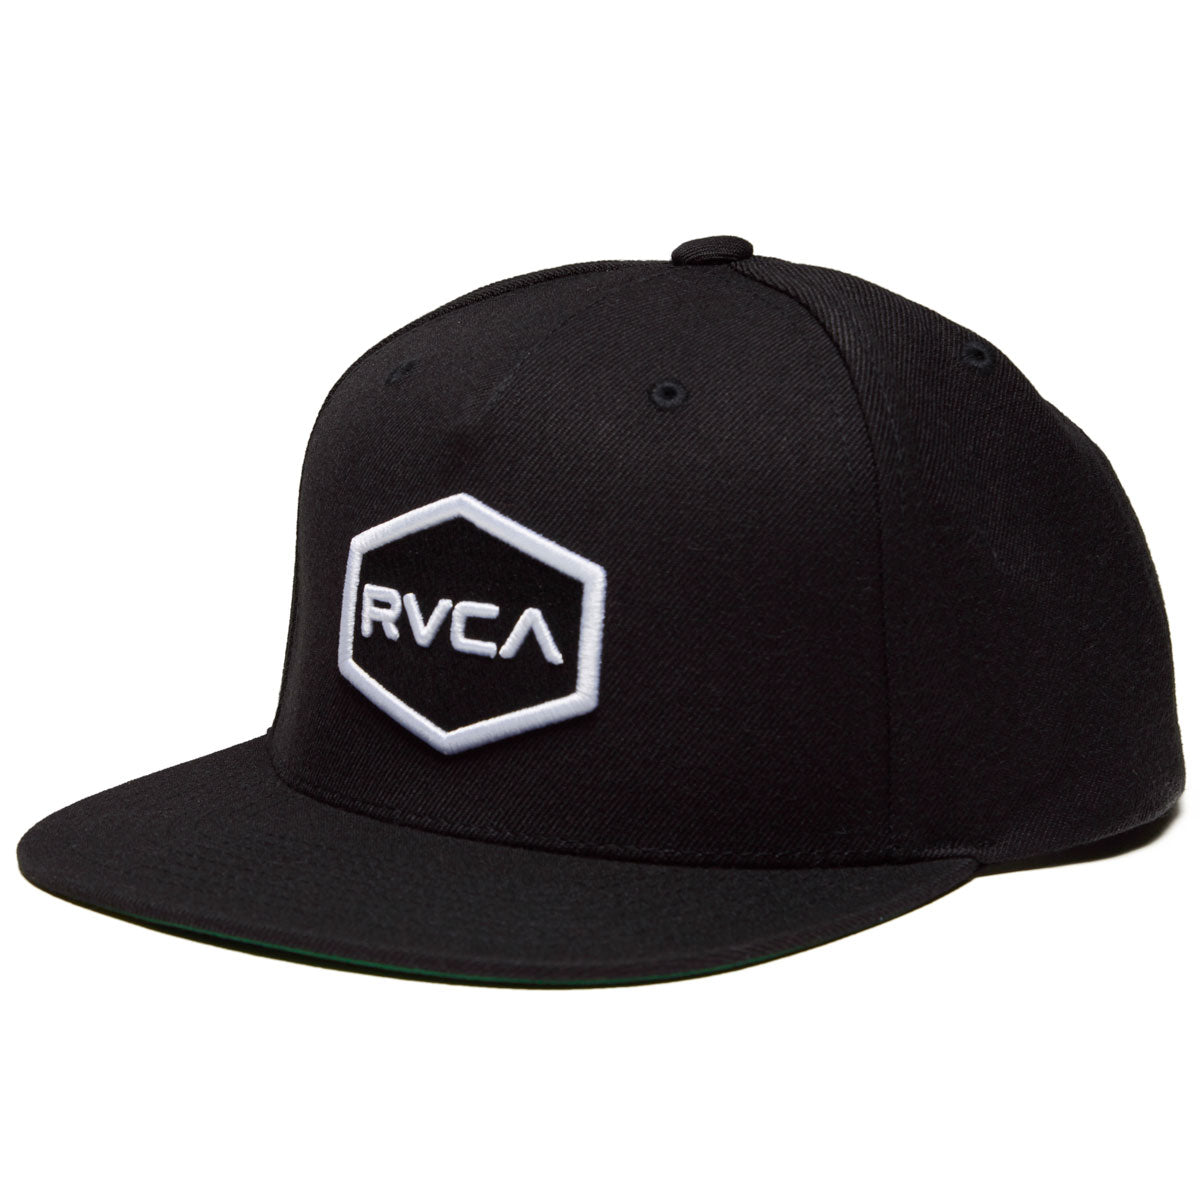 RVCA Commonwealth Snapback Hat - Black/White image 1